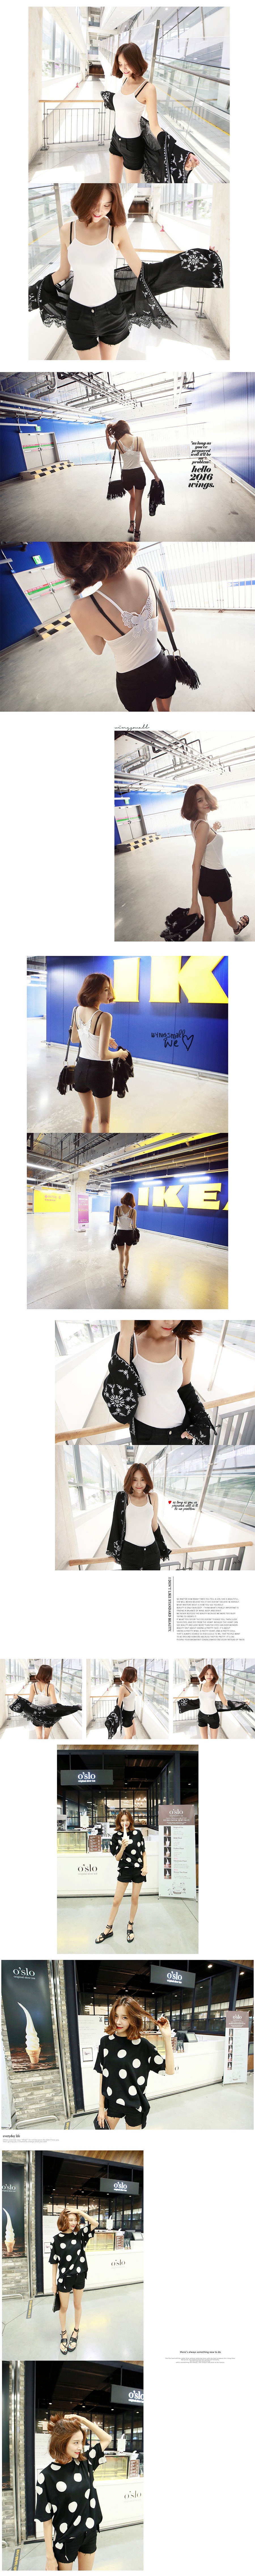 KOREA Denim Shorts #Black M(27-28) [Free Shipping]